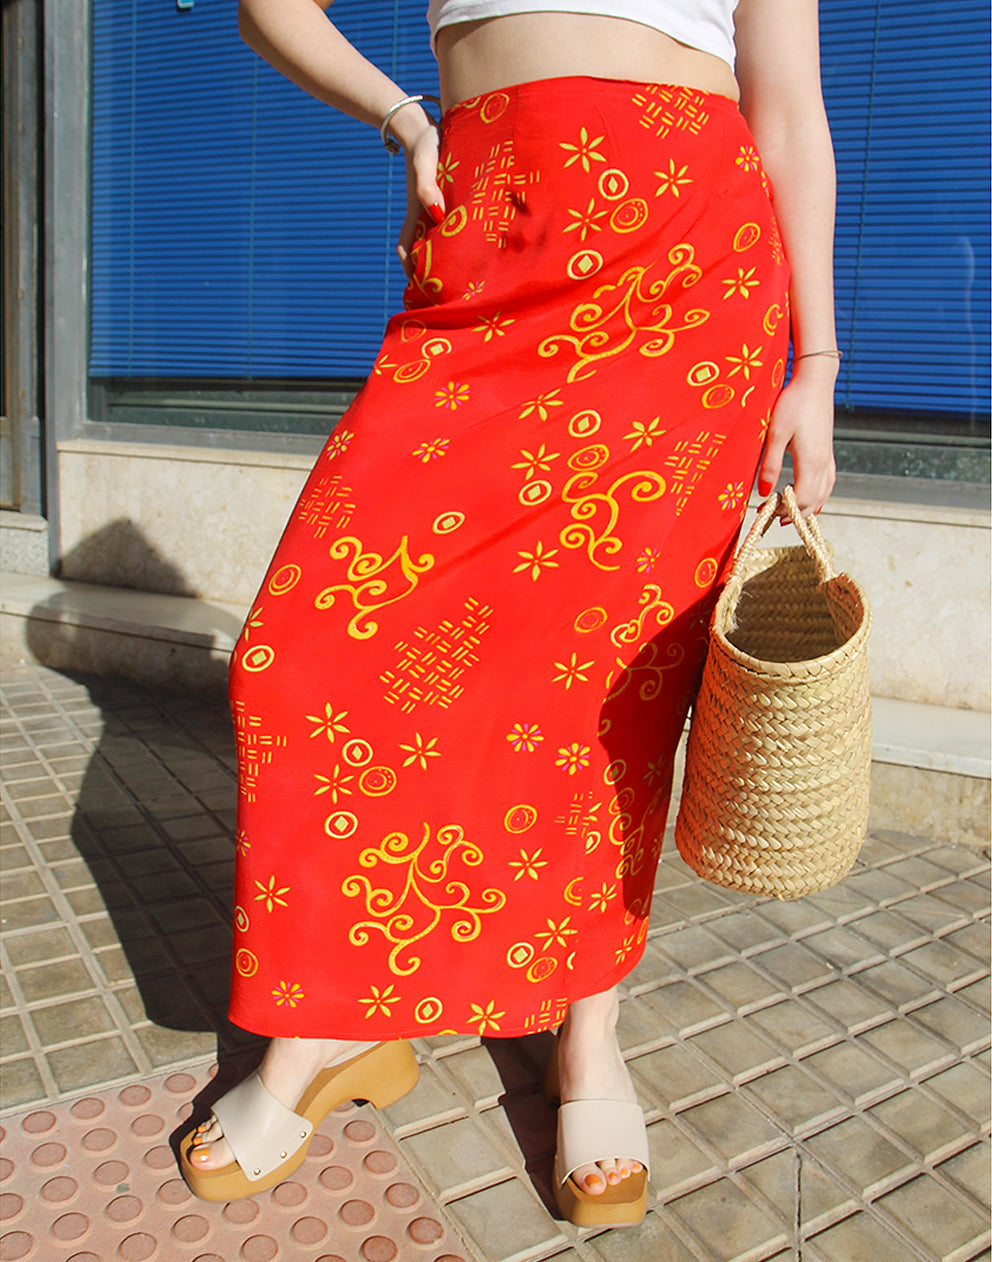 Red Floral Print Wrap Midi Skirt